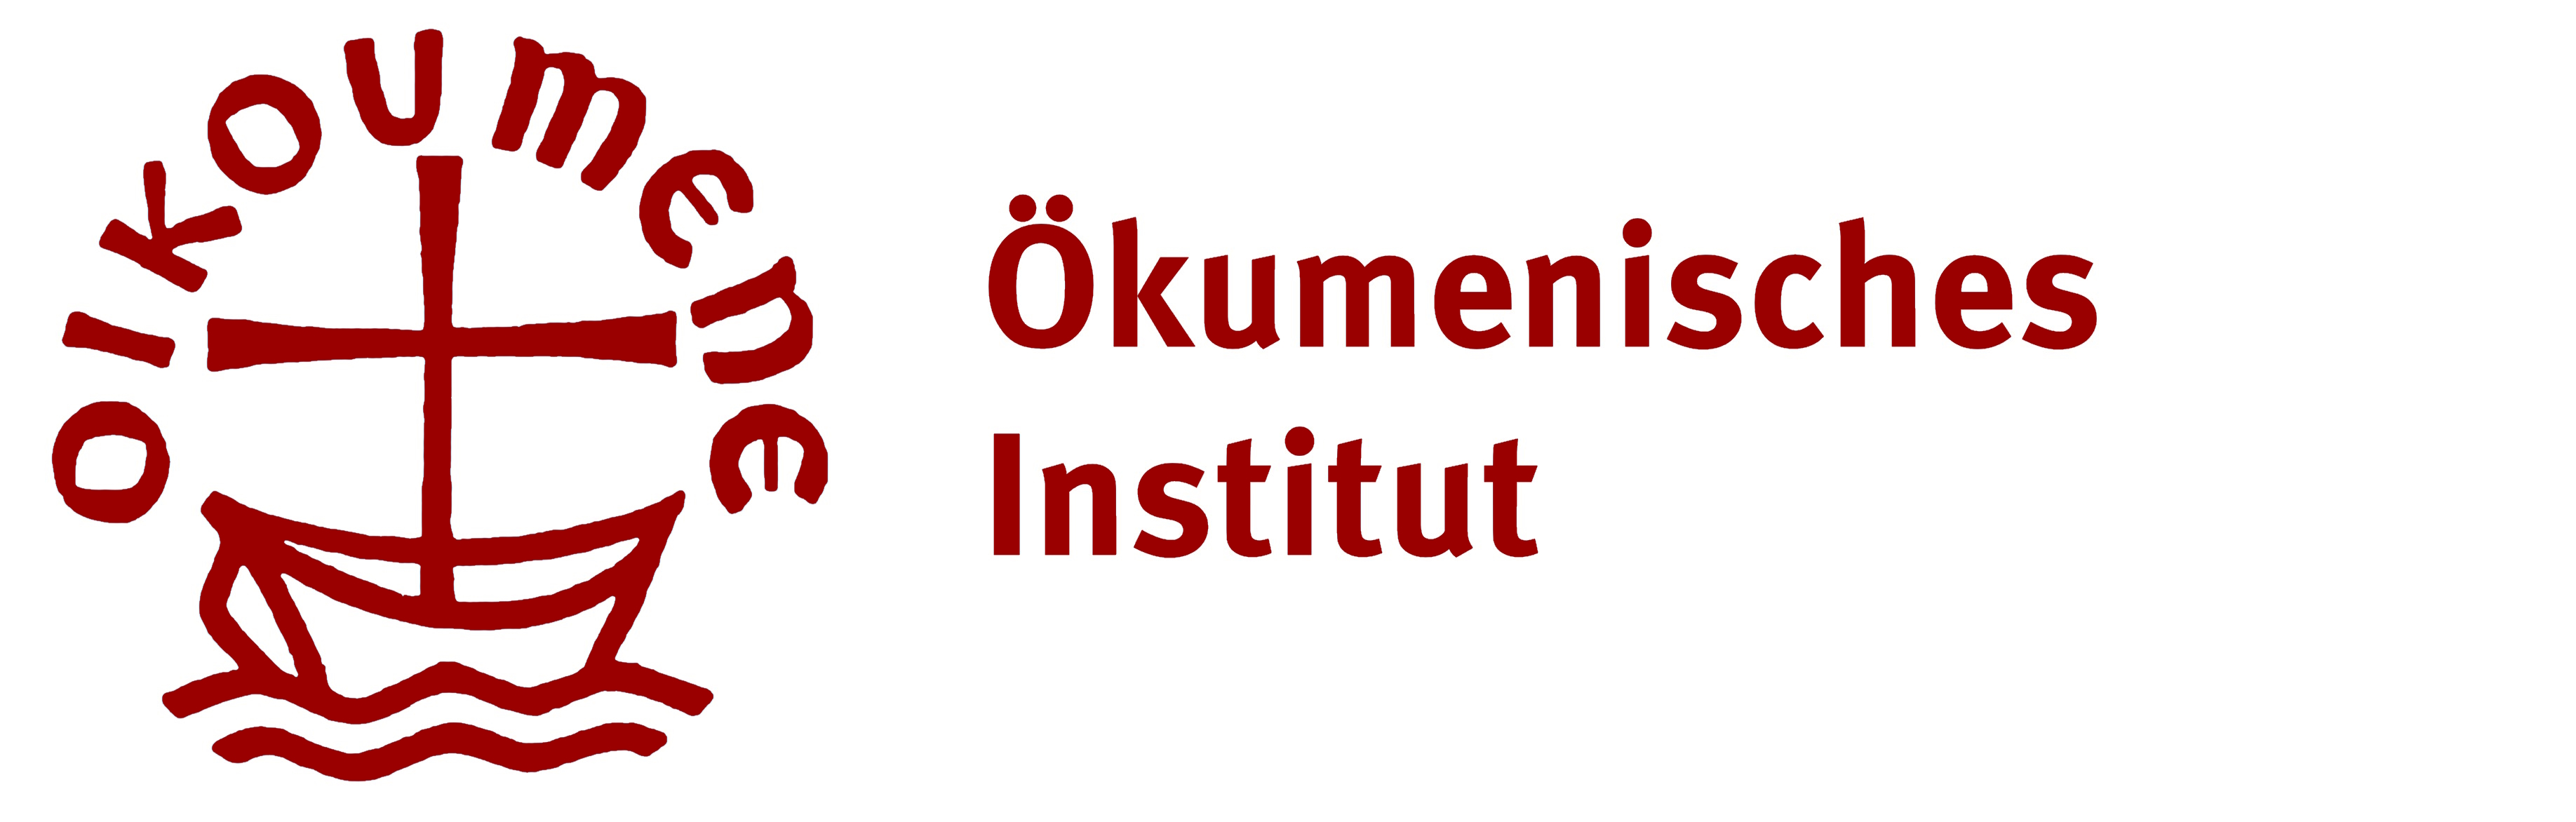 Ökumenisches Institut